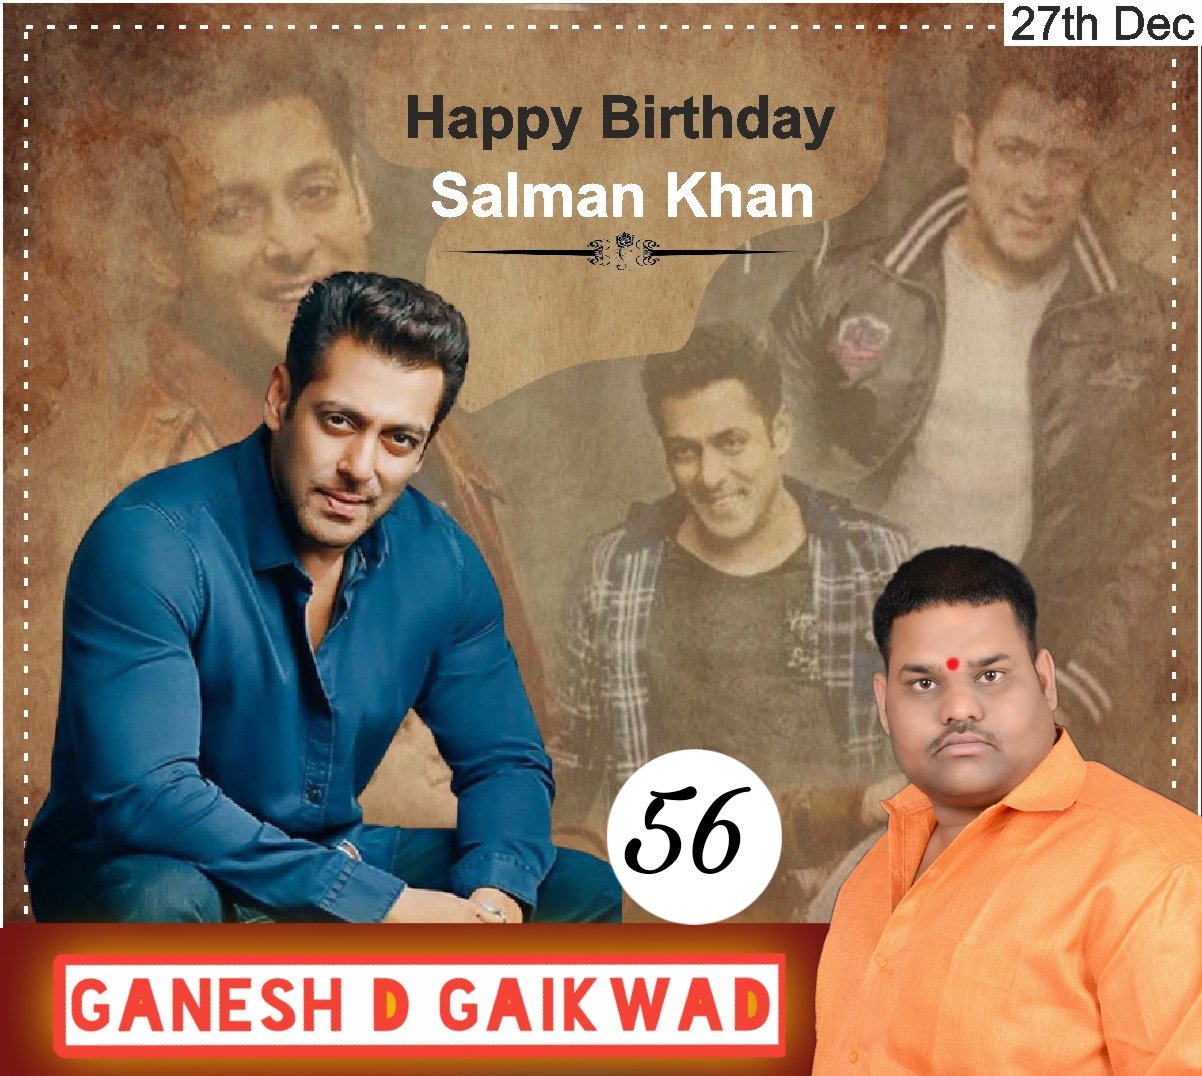 Happy birthday to you 
Salman khan sir      27/12/2021 